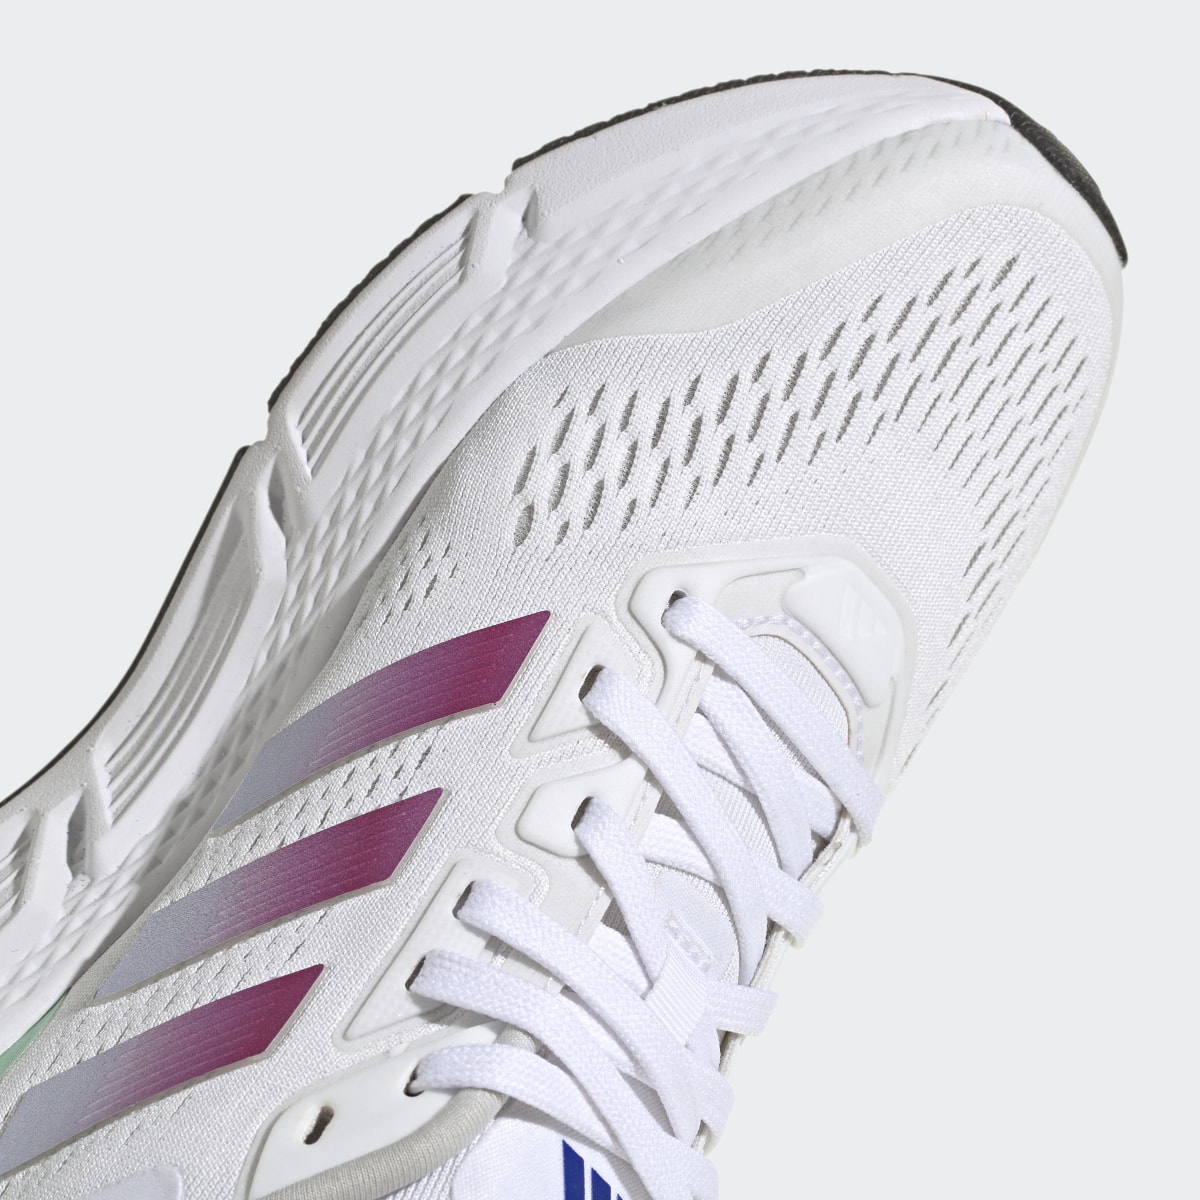 Adidas Scarpe Questar. 10